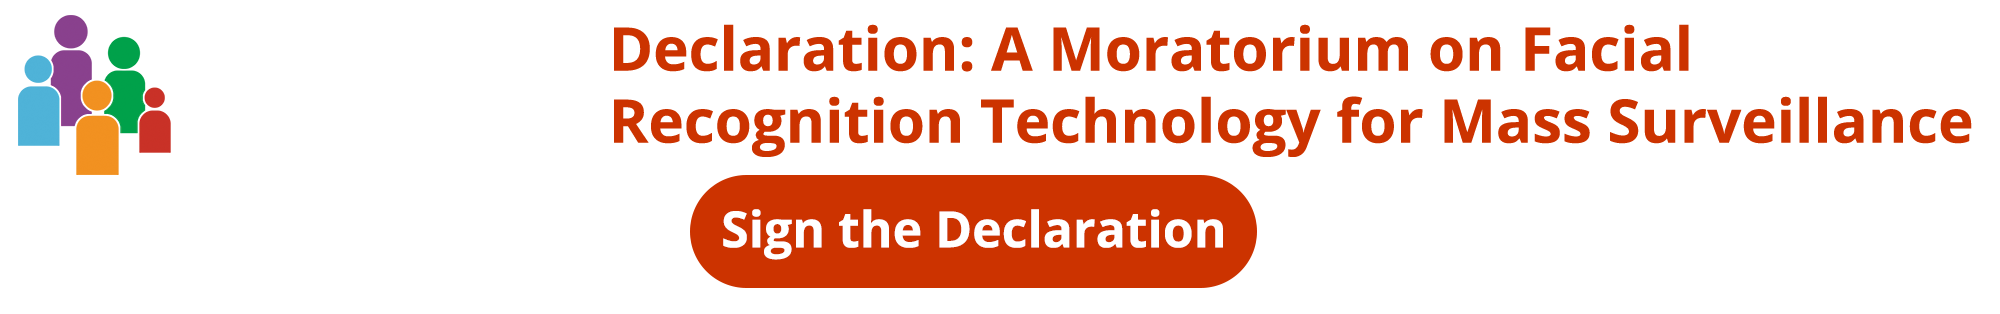 Sign the Declaration: A Moratorium on Facial Recognition Technology for Mass Surveillance